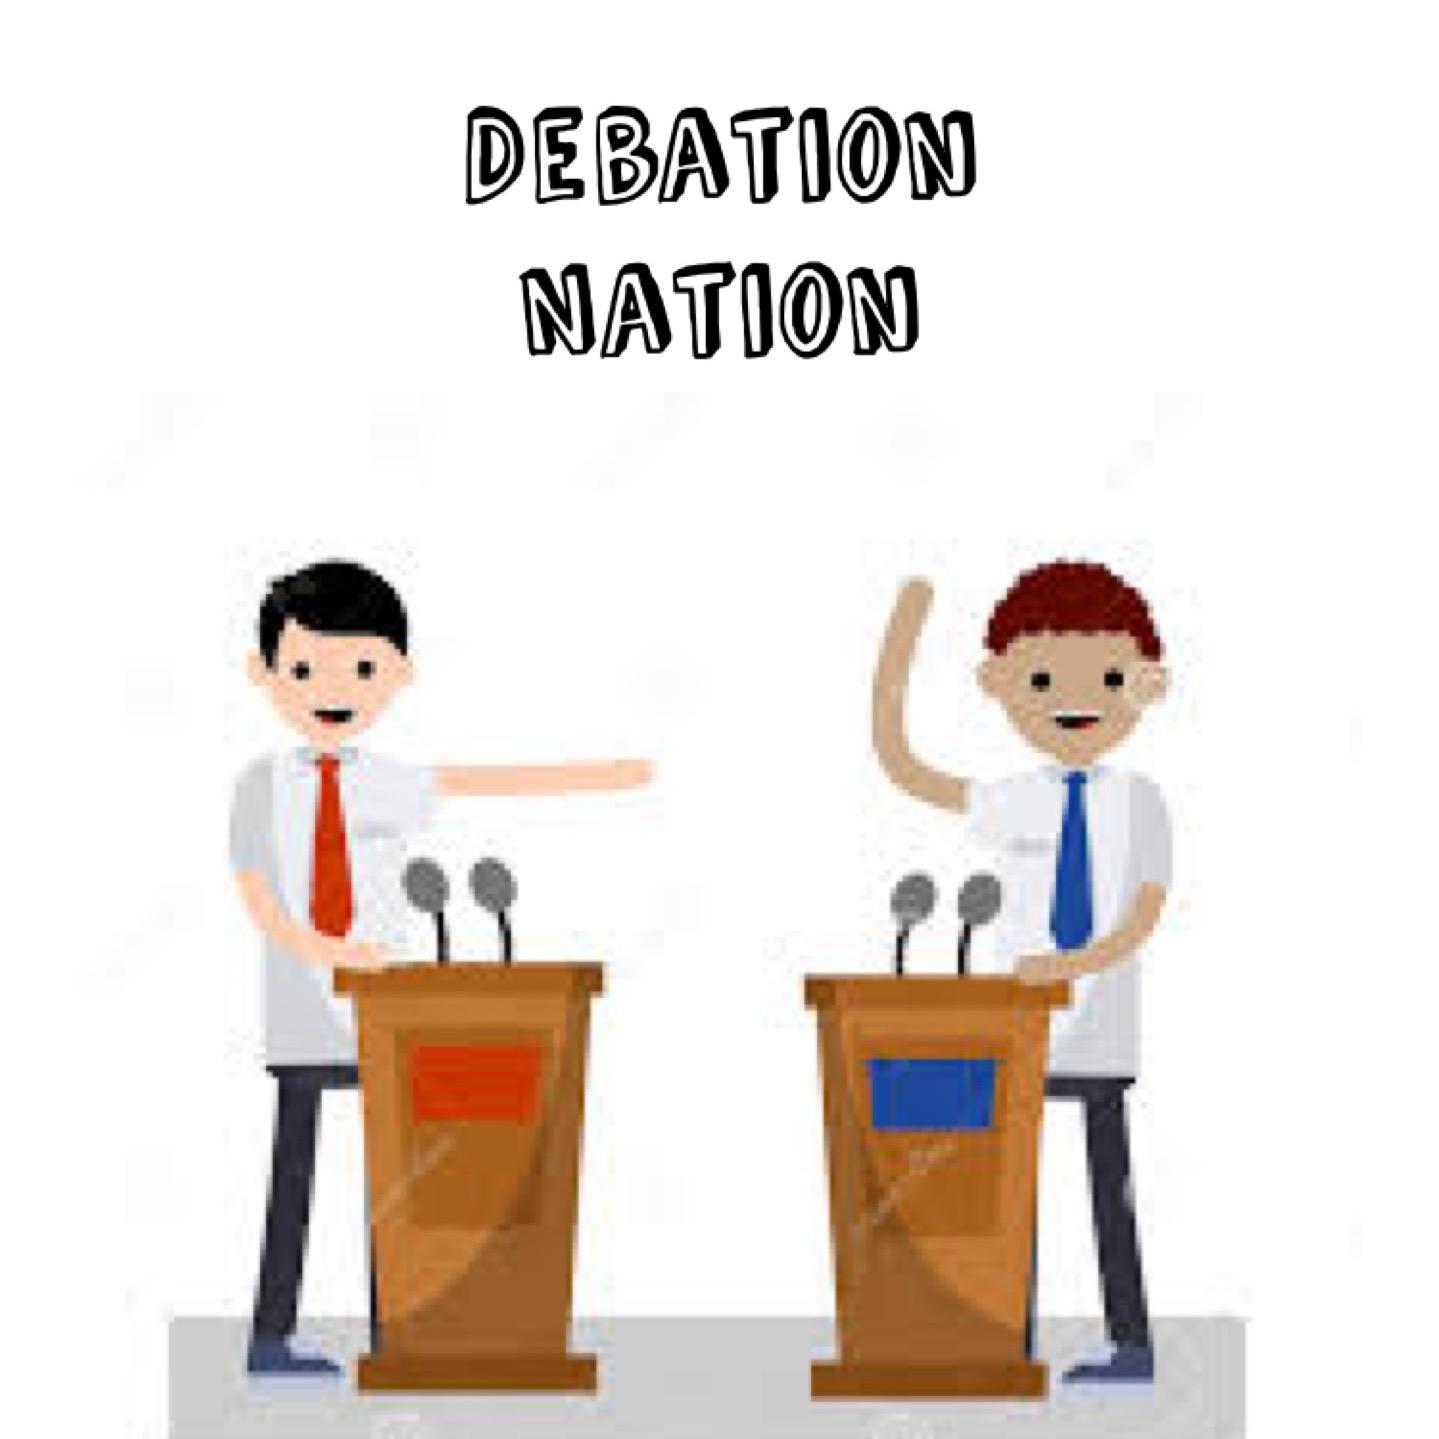 Debation Nation